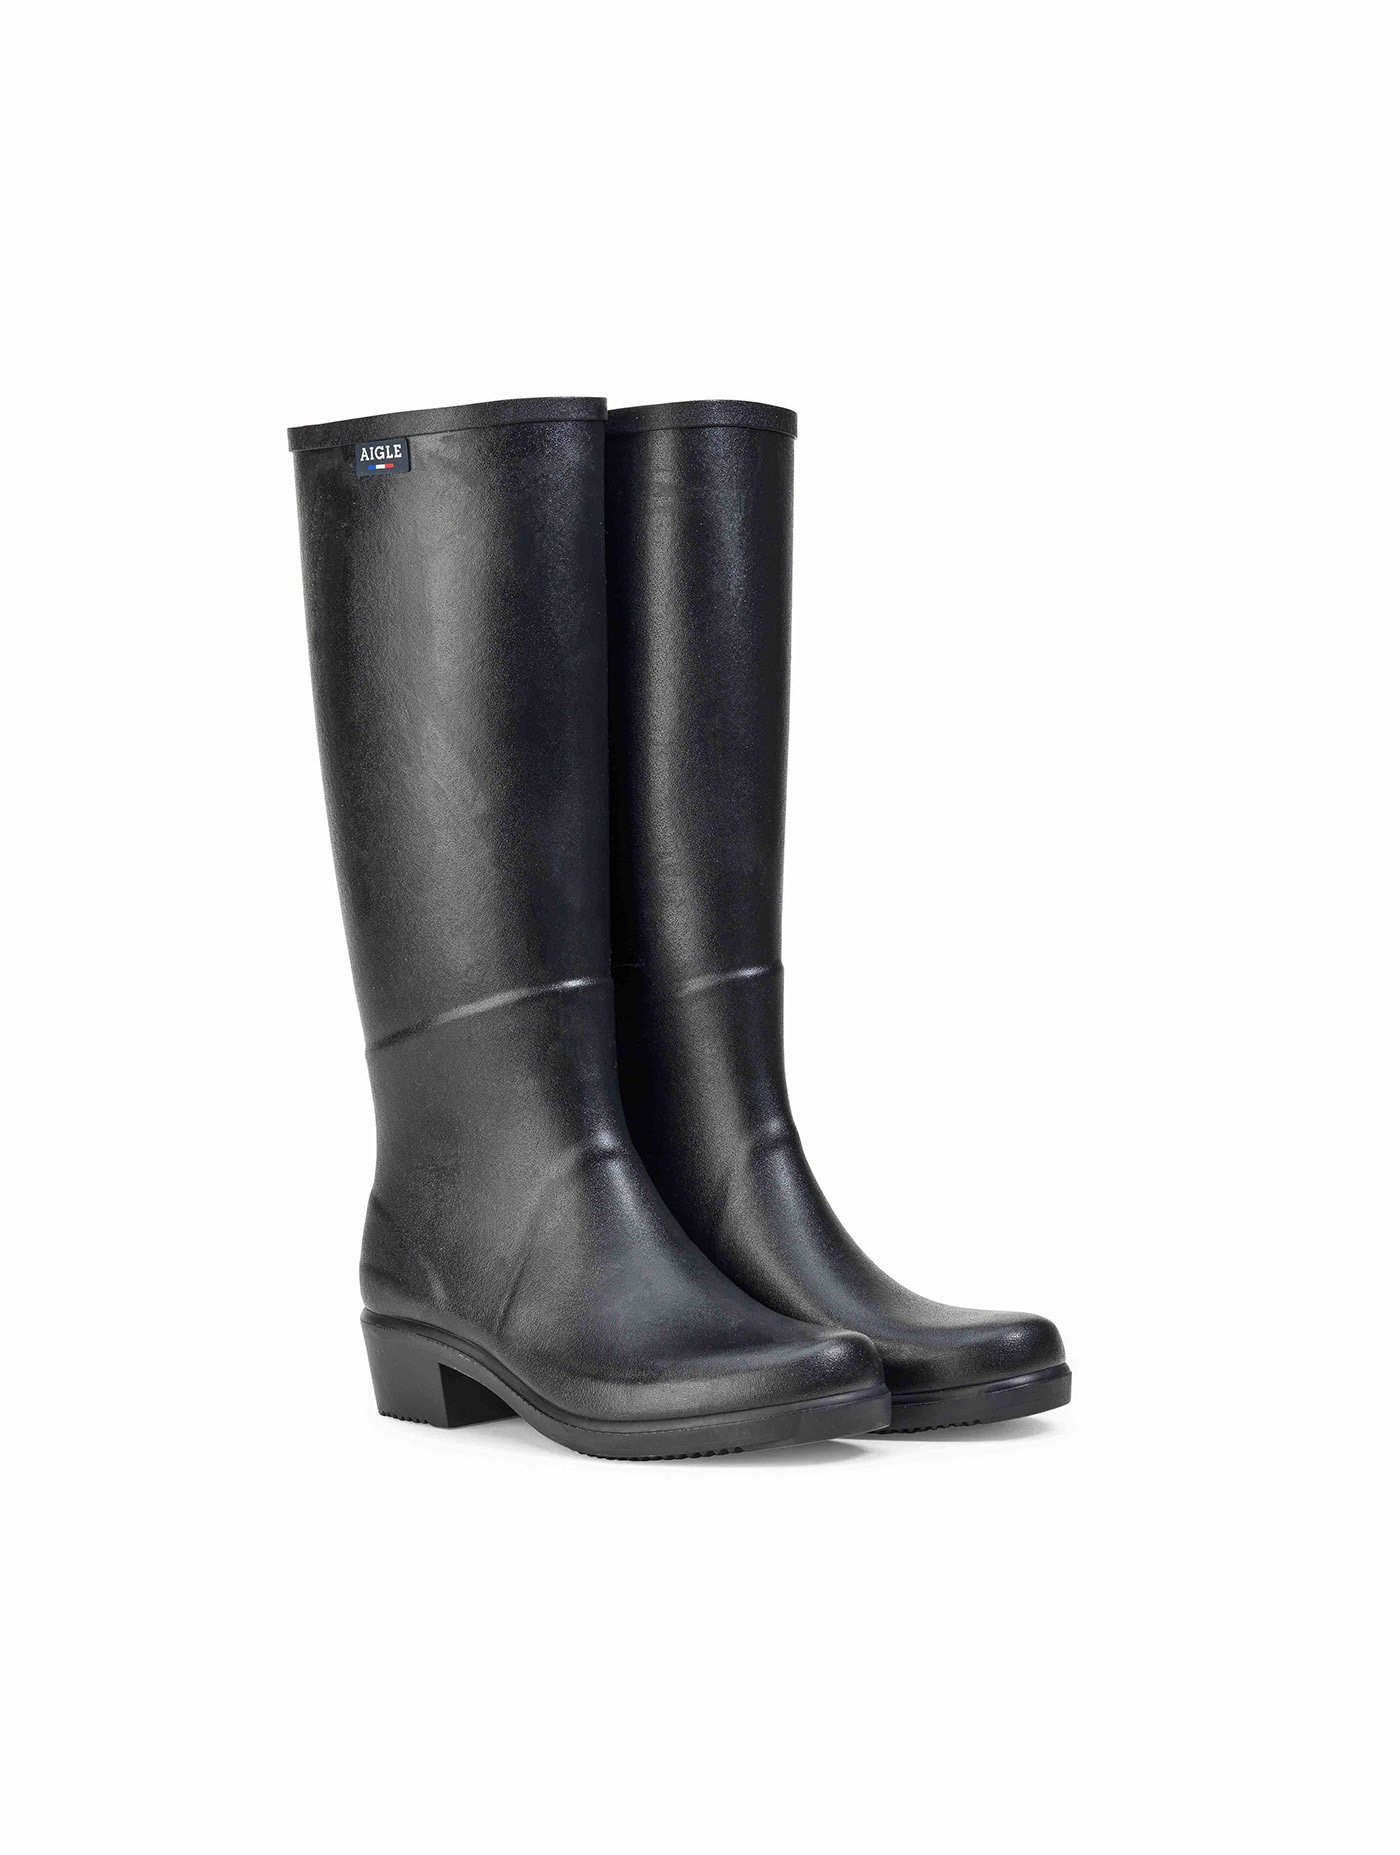 Aigle - Women's rubber boots Noir - Miss juliettewomen | AIGLE